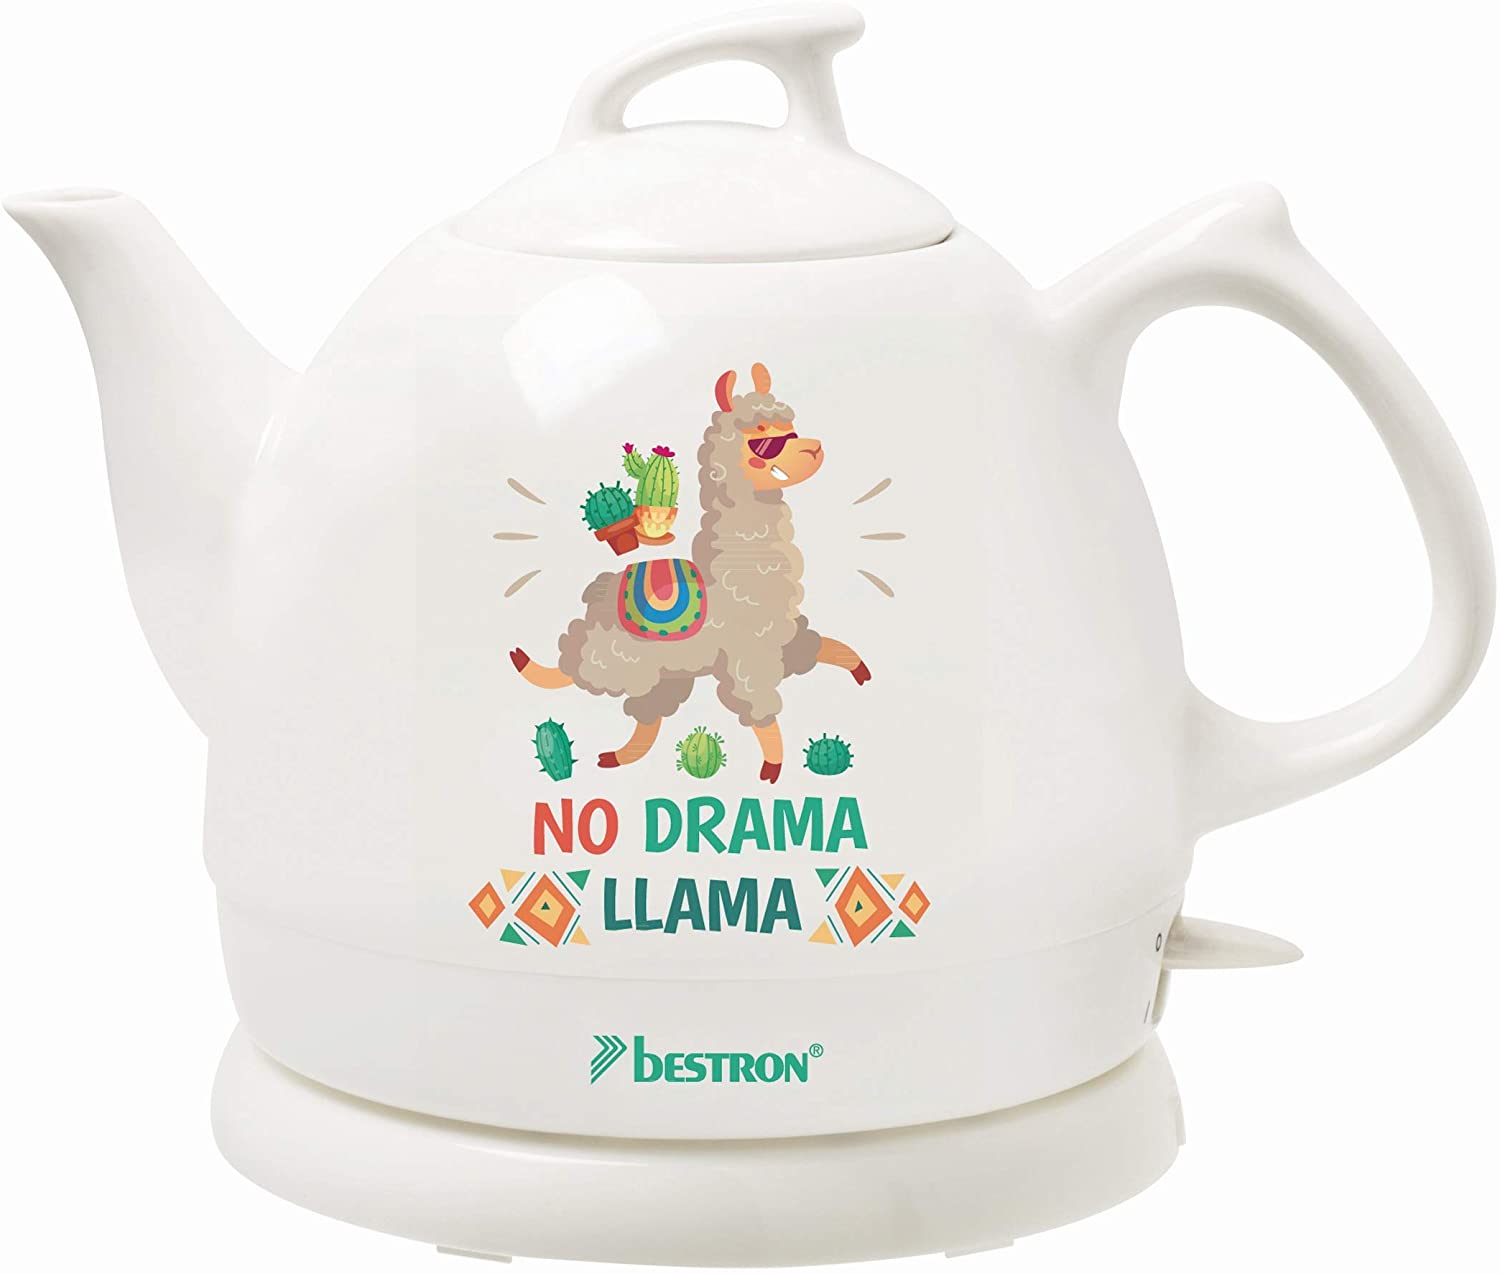 Bestron No Drama Llama Ceramic Retro Kettle 0.8 Litre Approx. 1800 Watt